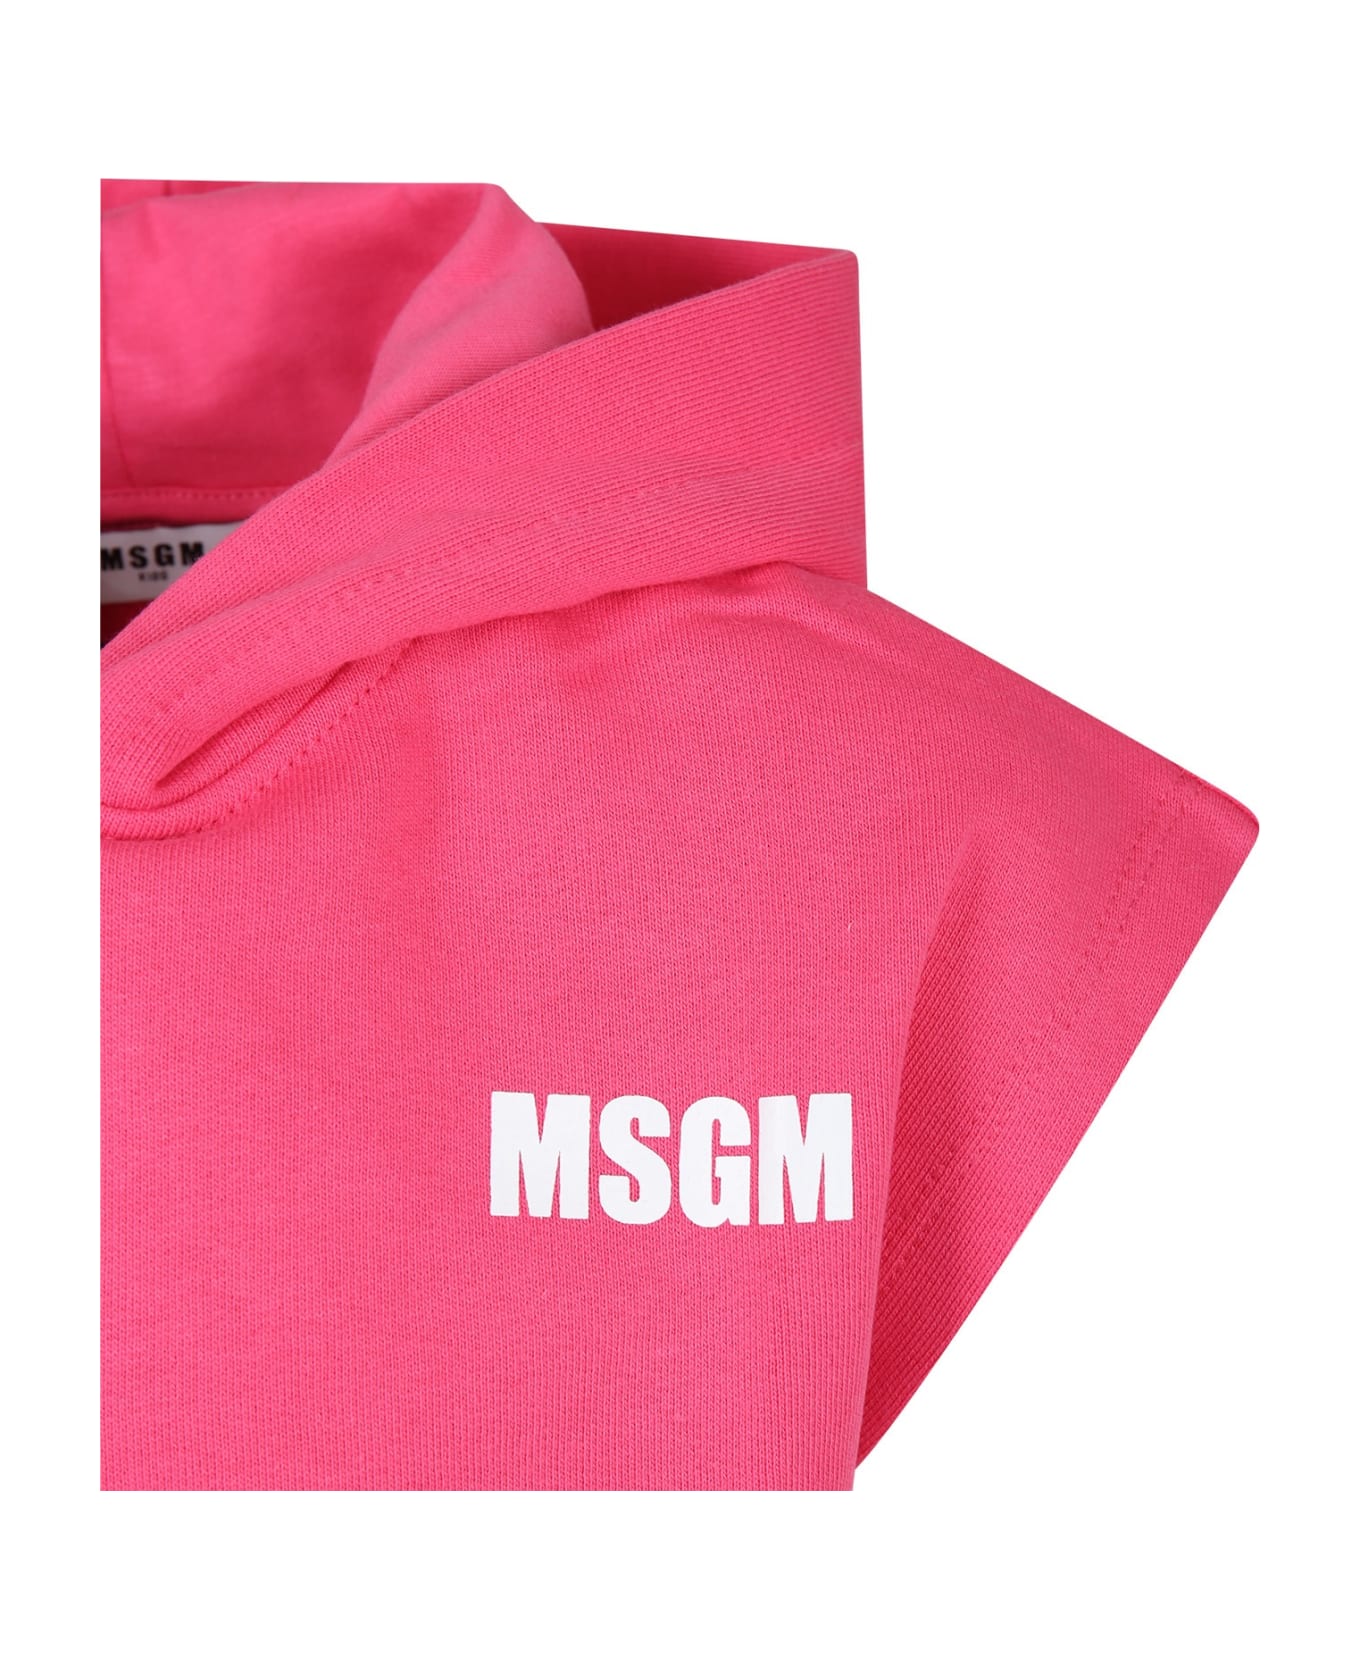 MSGM Fuchsia Sweatshirt For Girl With Logo And Writing - Fuchsia